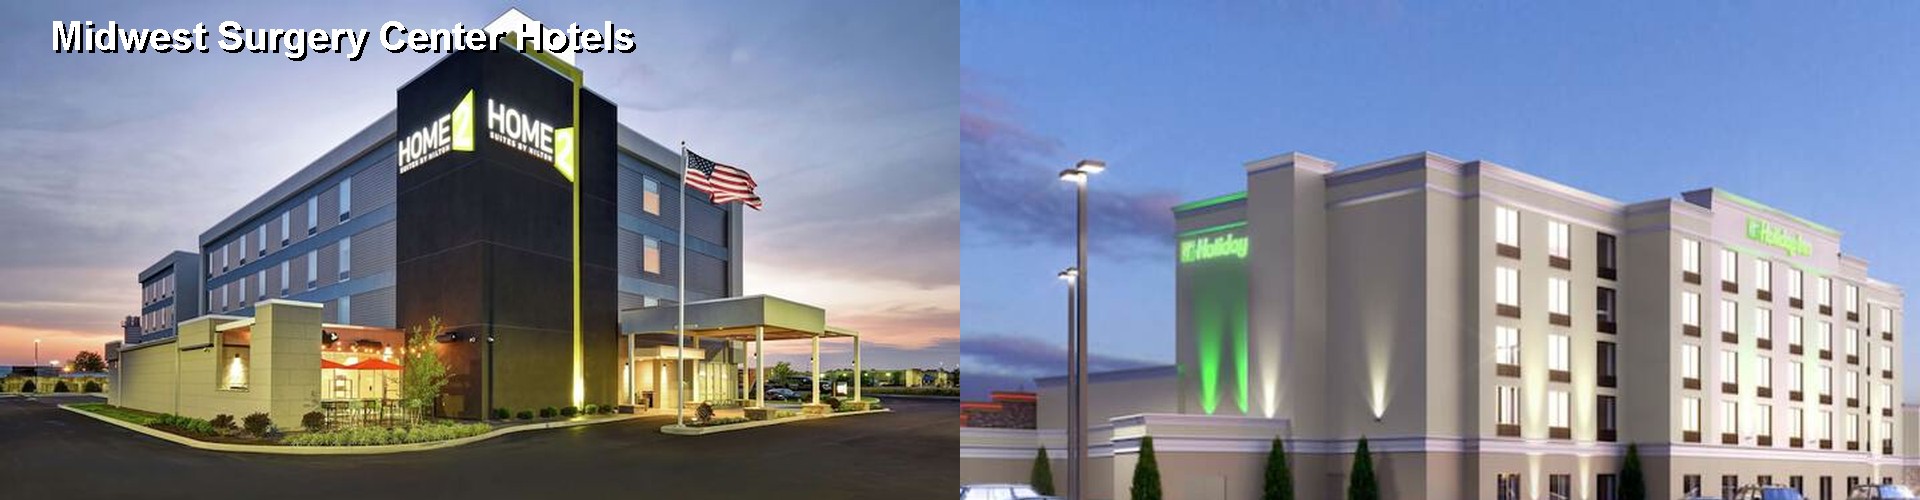 5 Best Hotels near Midwest Surgery Center